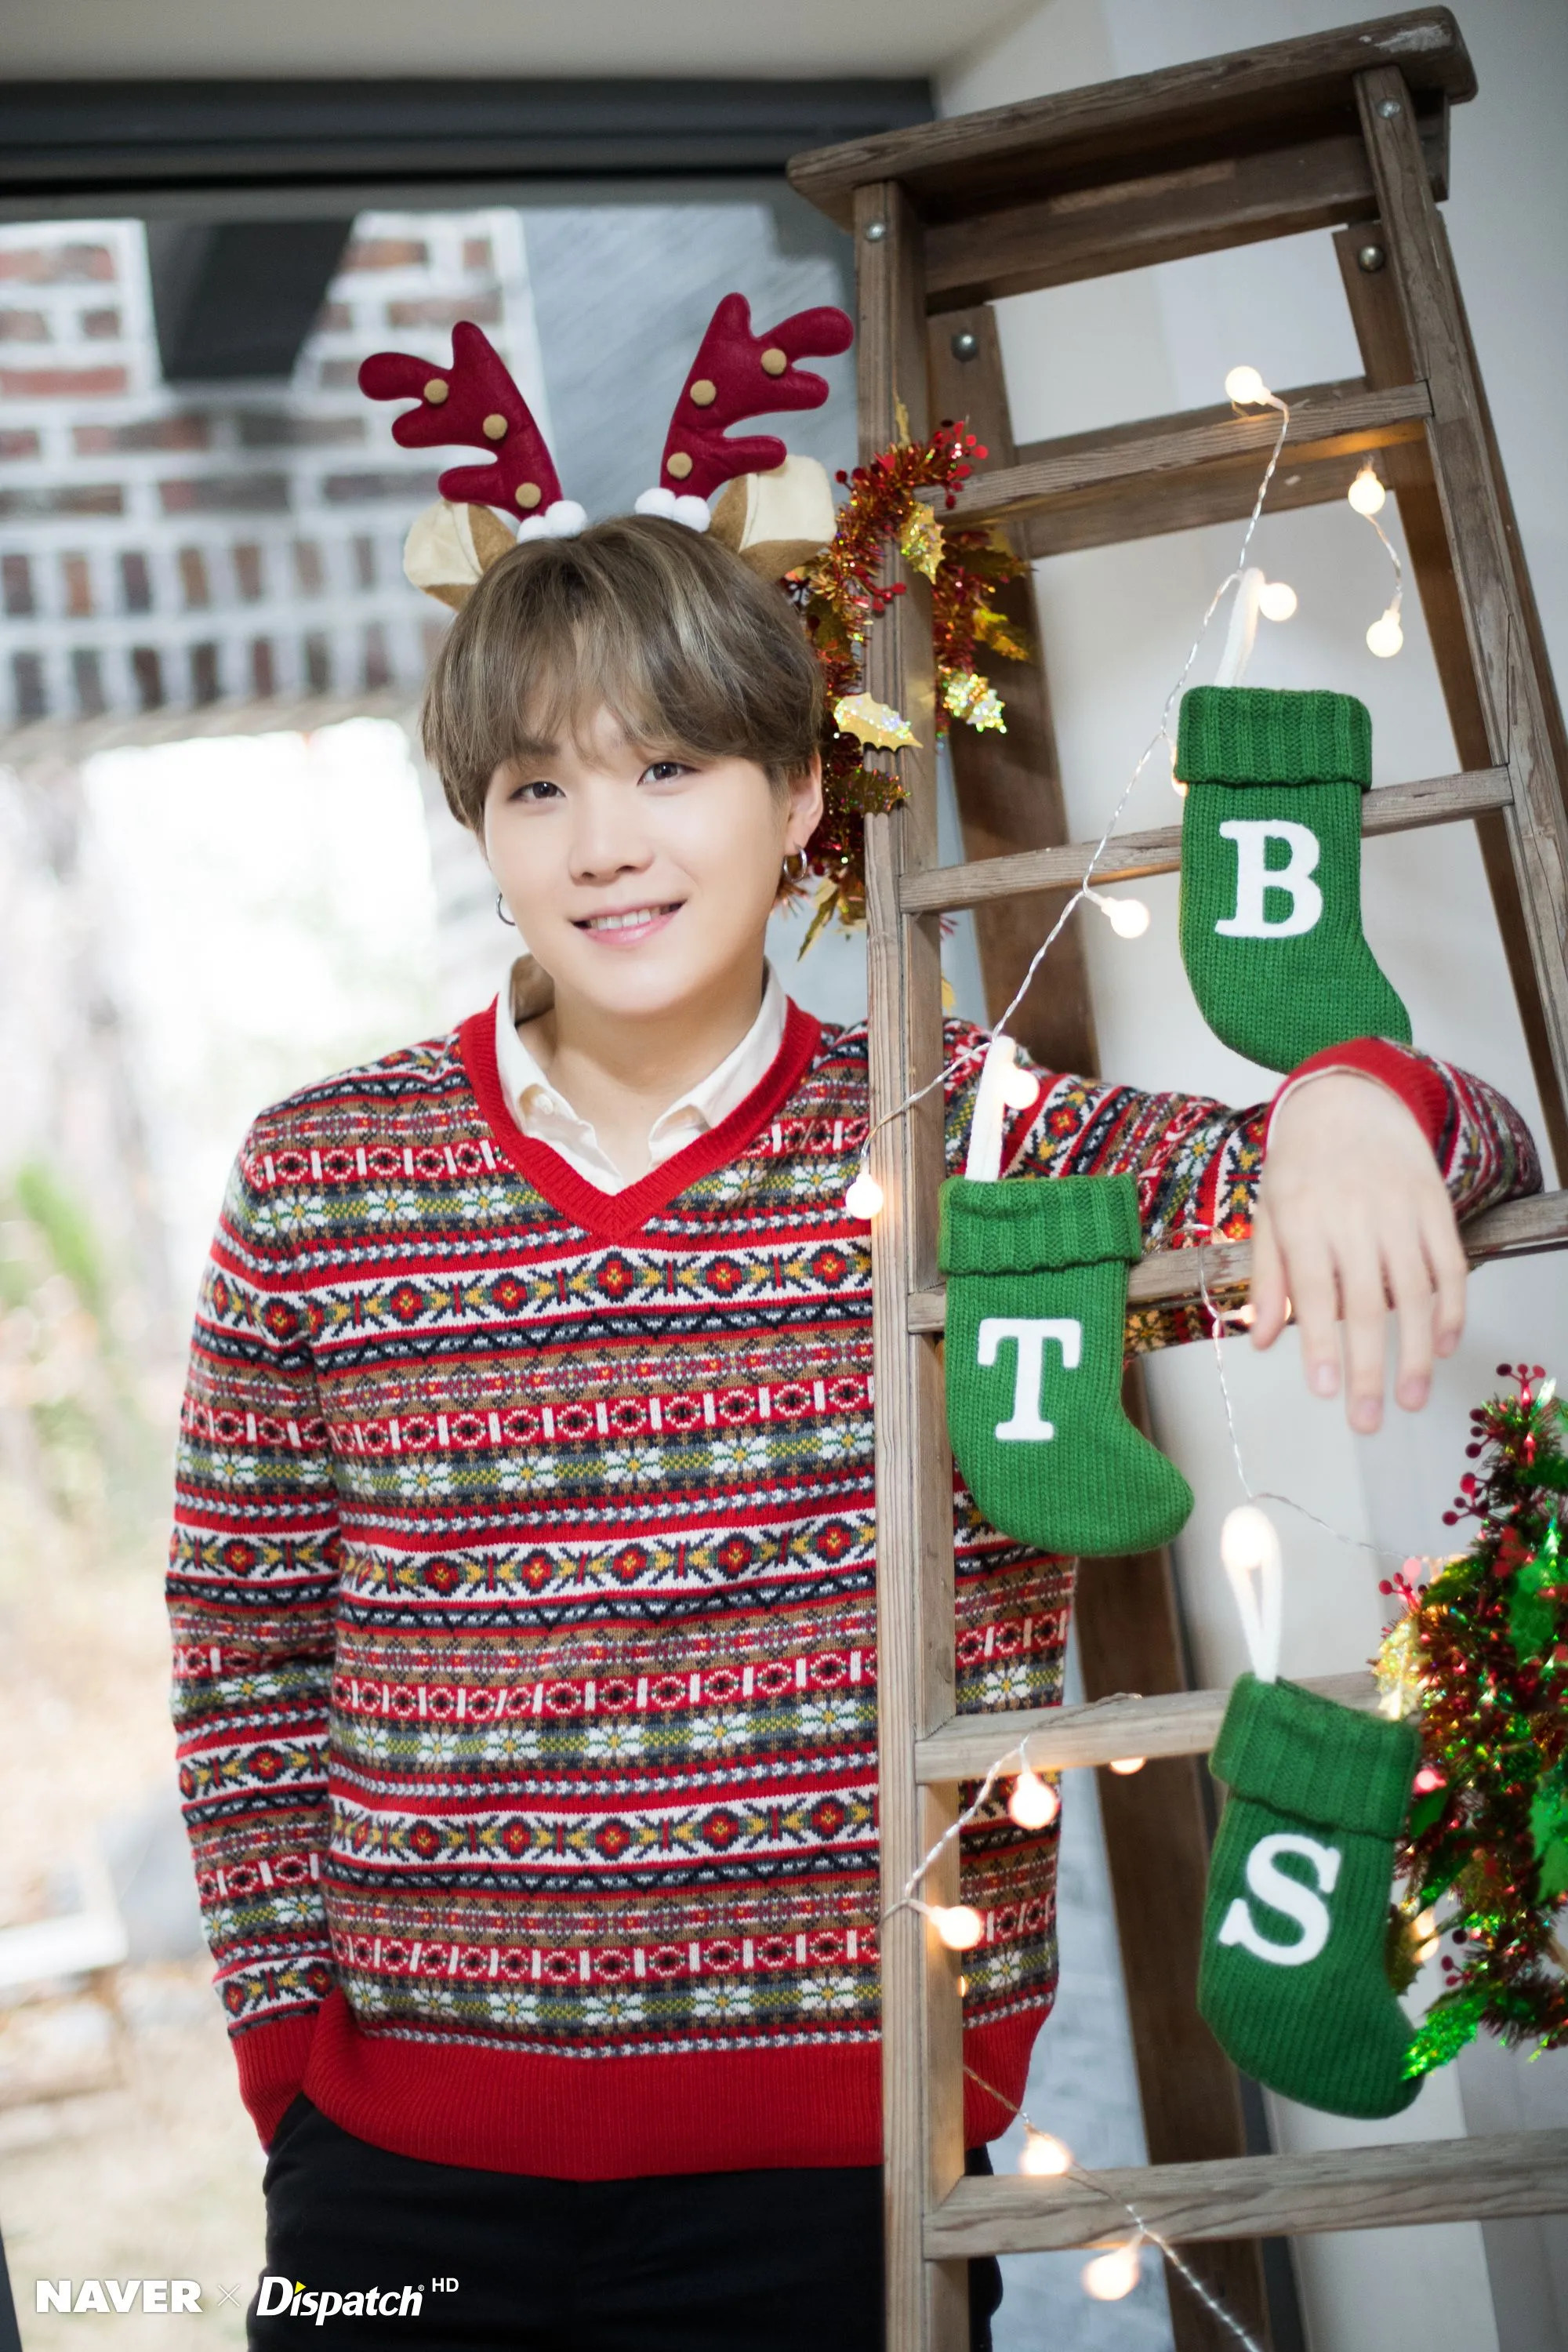 December 25, 2019 BTS Suga Christmas photoshoot by Naver x Dispatch ...